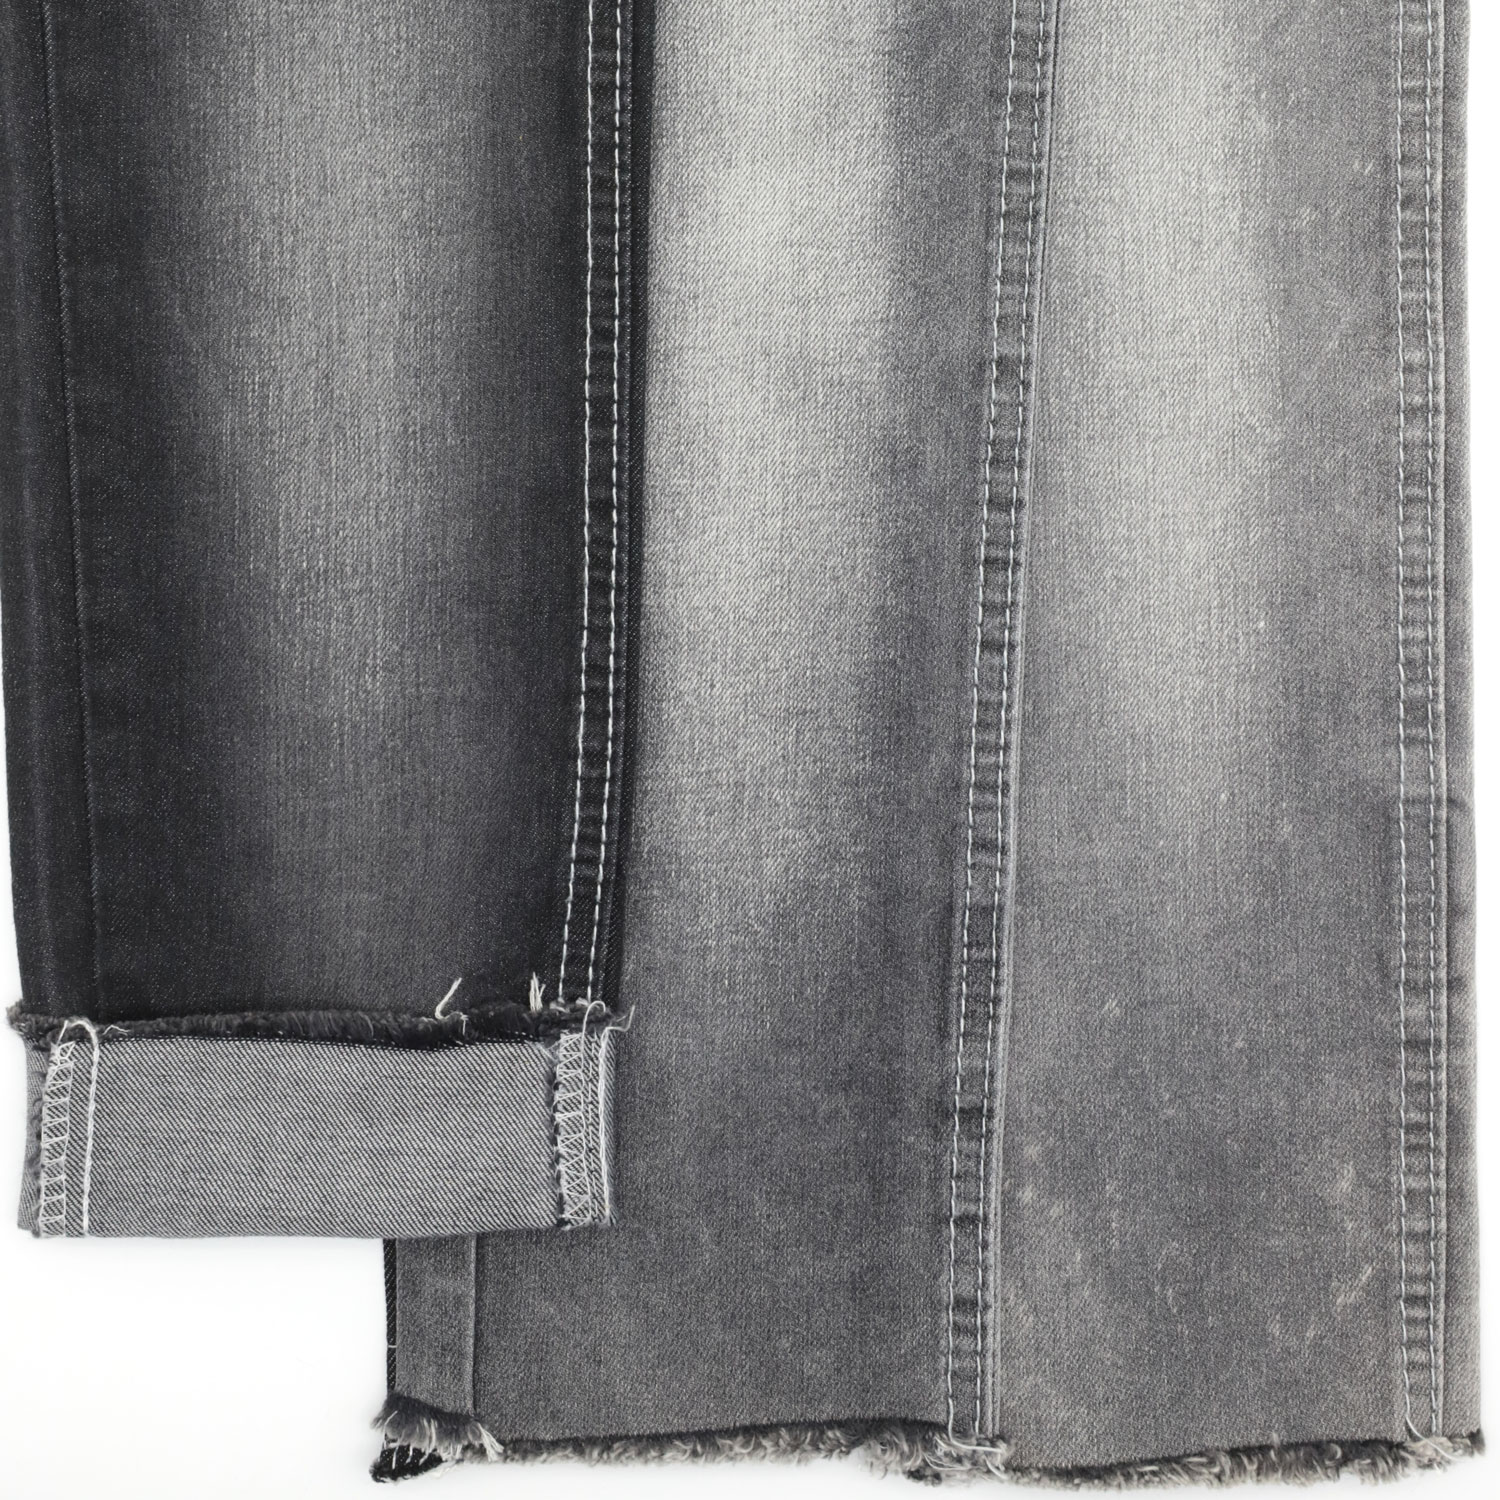 Do You Think That Dark Denim Jeans Match Black? 1